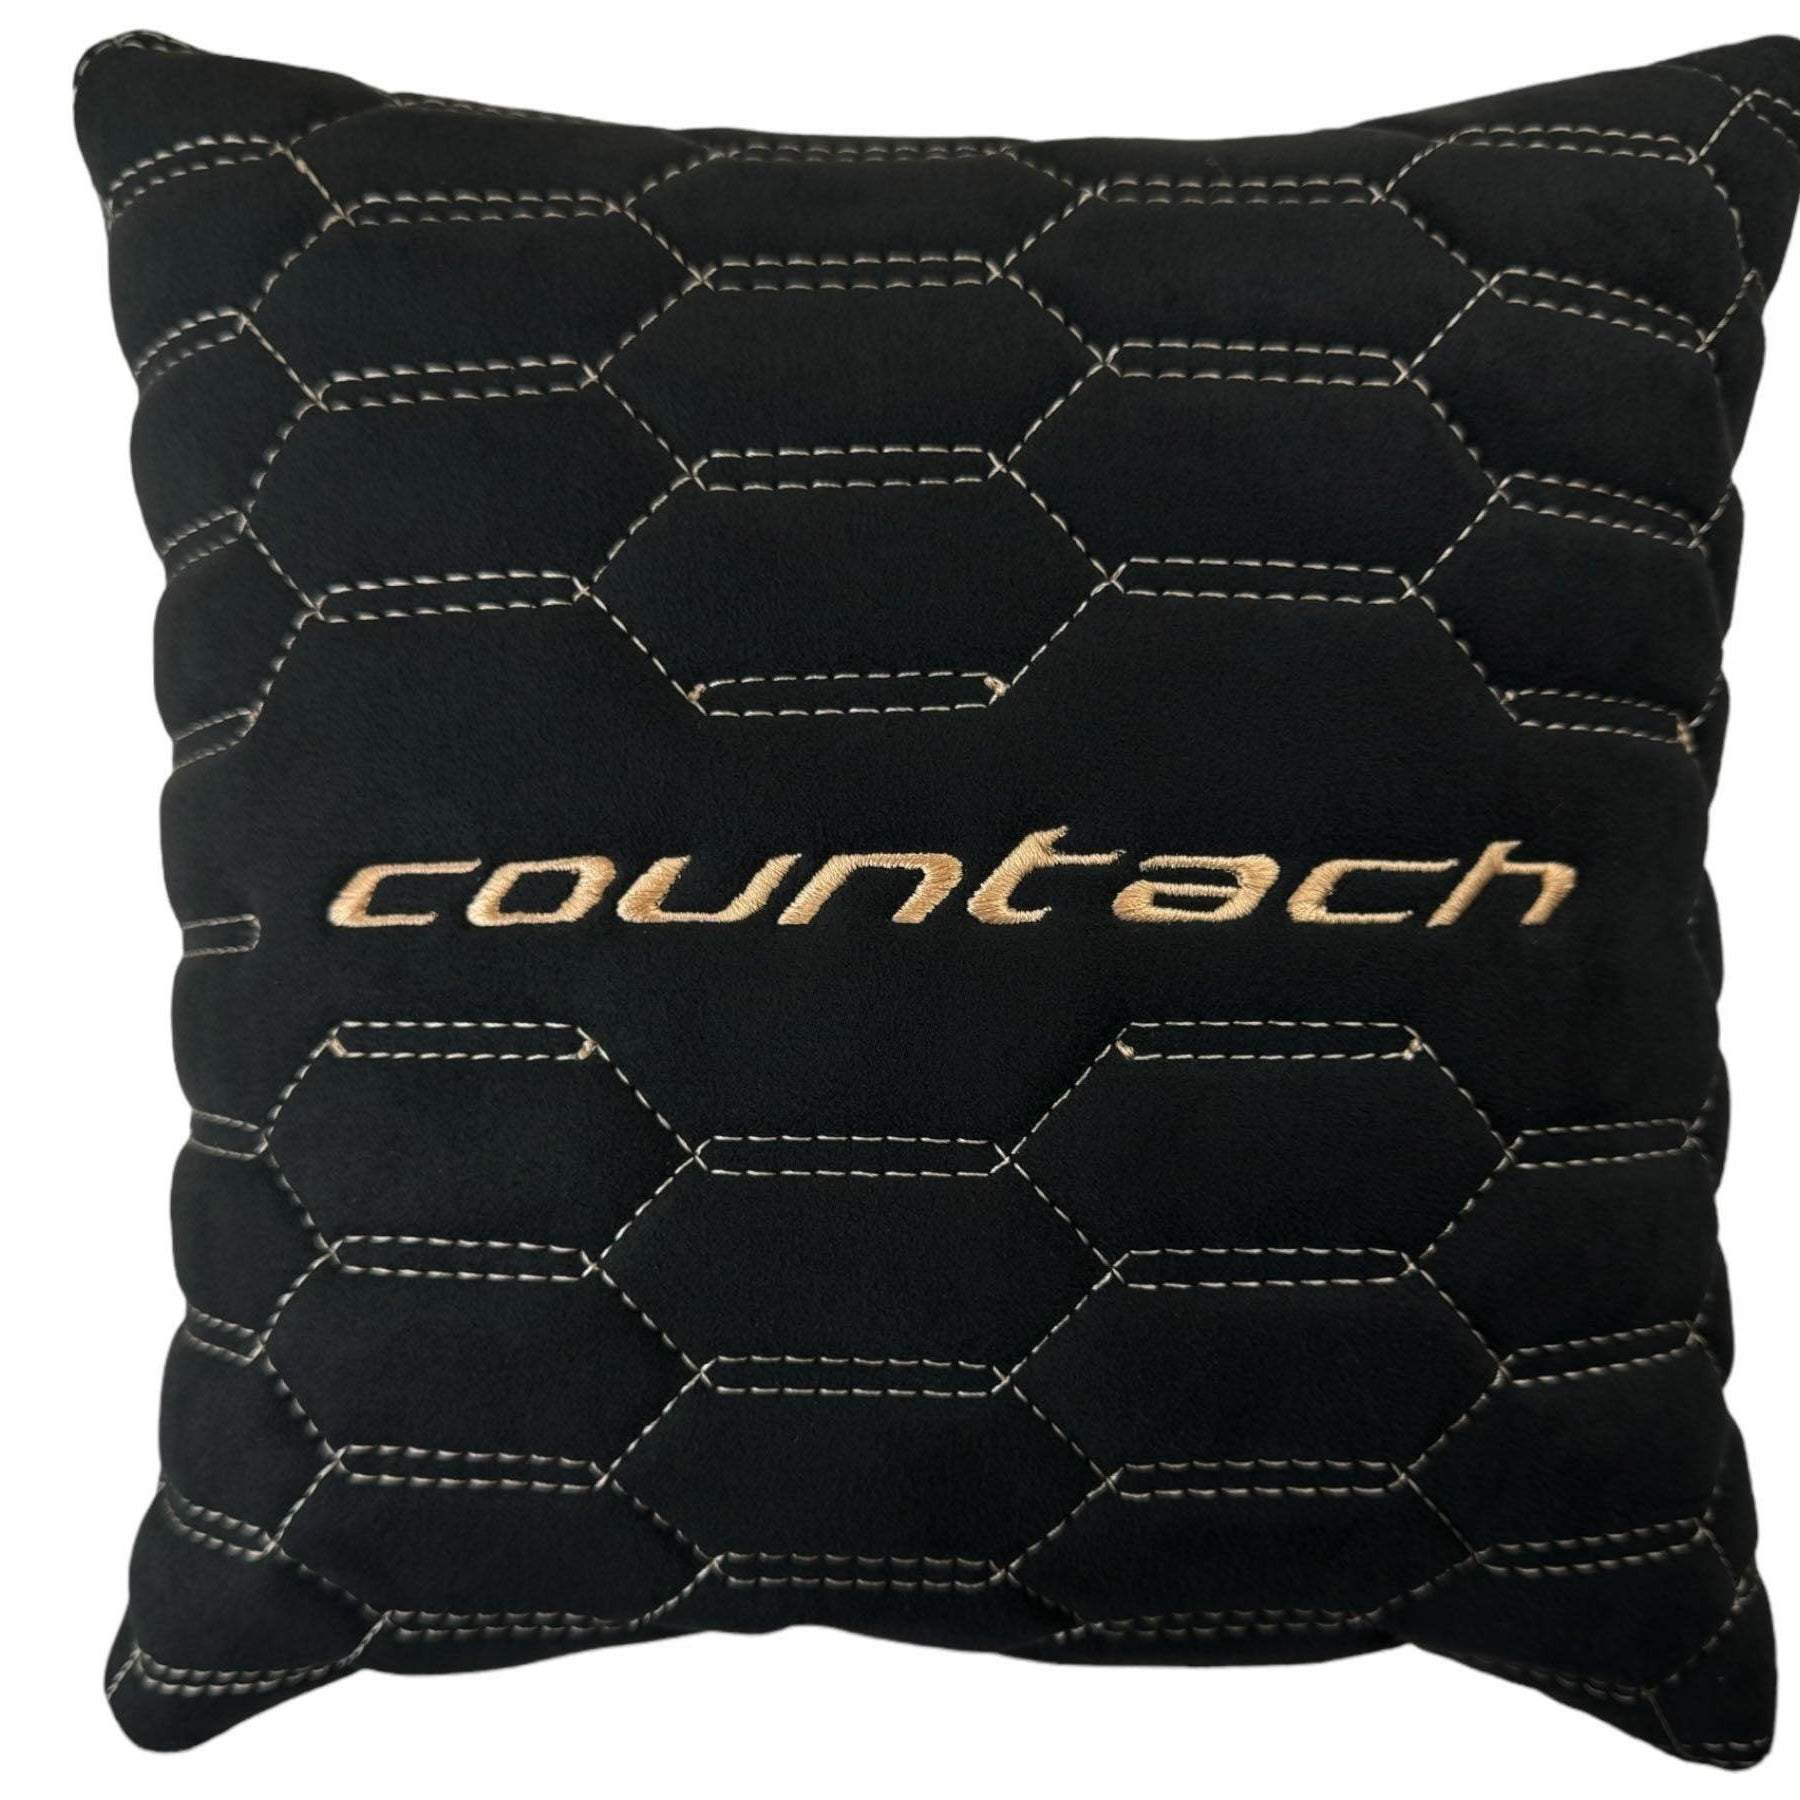 Black Alcantara Leather Pillows Countach Set of 2 Tan Sewing